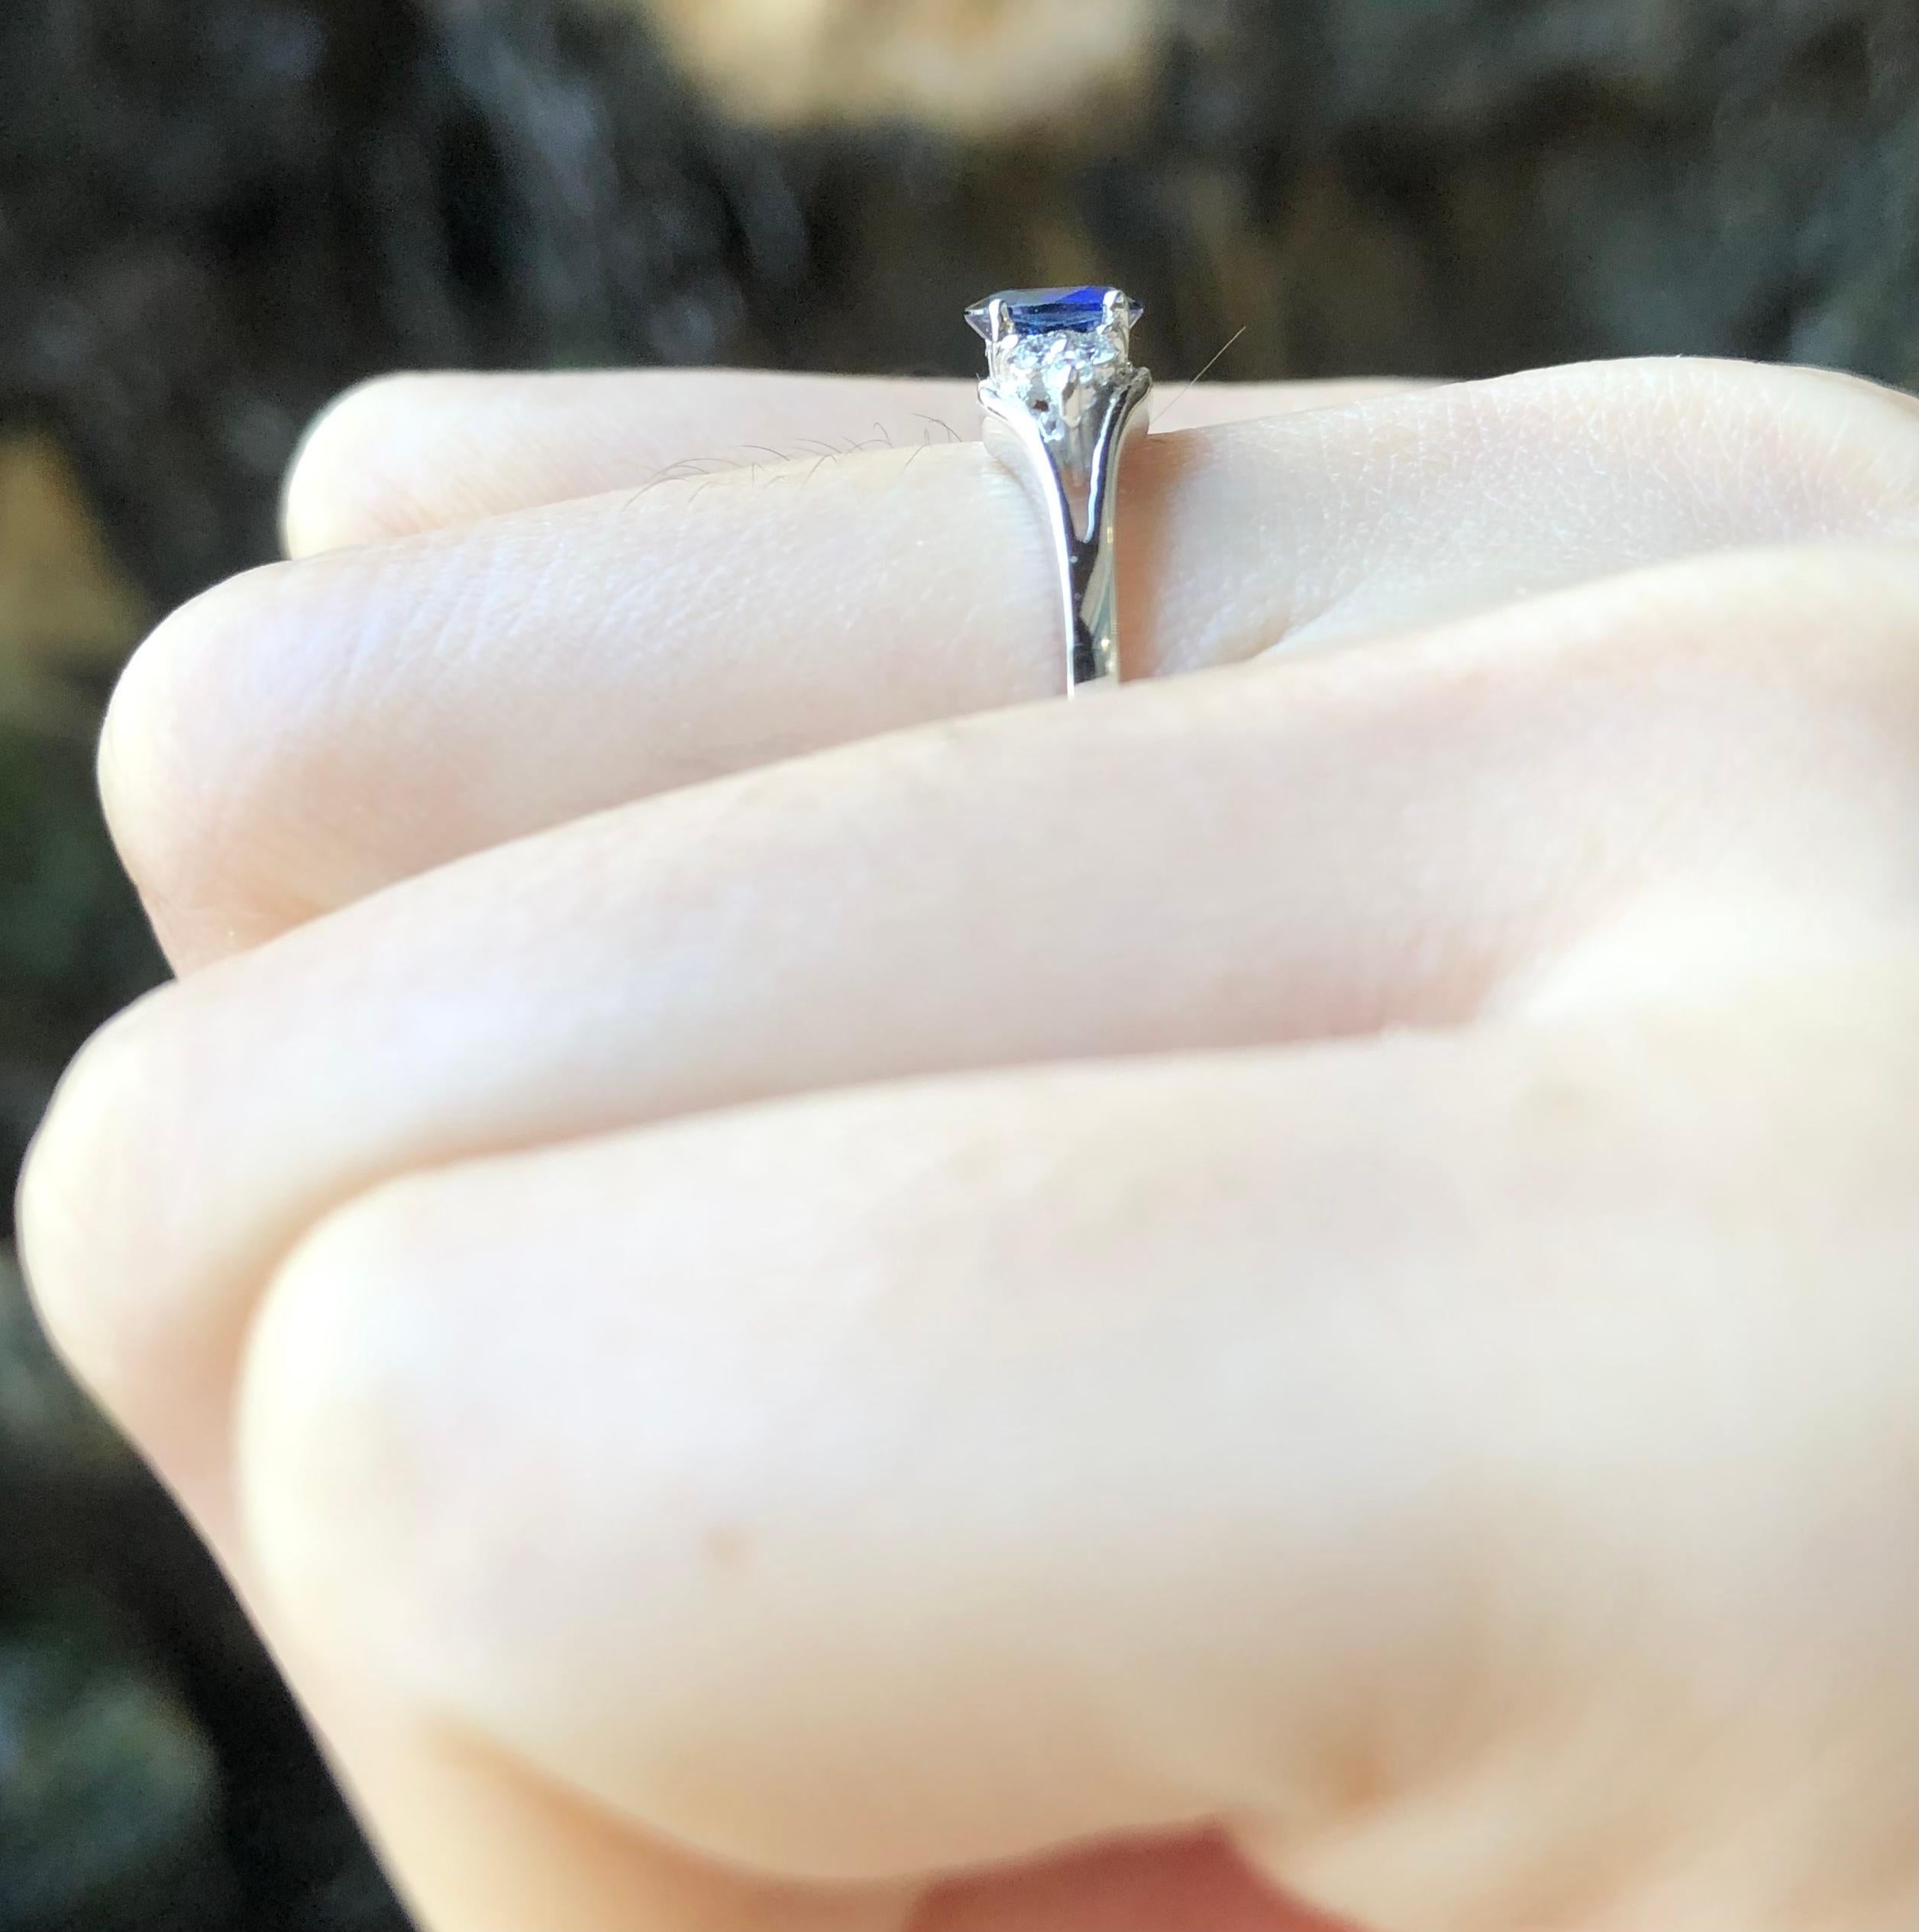 Blue Sapphire 0.52 carat with Diamond 0.08 carat Ring set in 18 Karat White Gold Settings

Width:  1.1 cm 
Length: 0.6 cm
Ring Size: 53
Total Weight: 2.31 grams

Blue Sapphire 
Width:  0.4 cm 
Length: 0.6 cm

